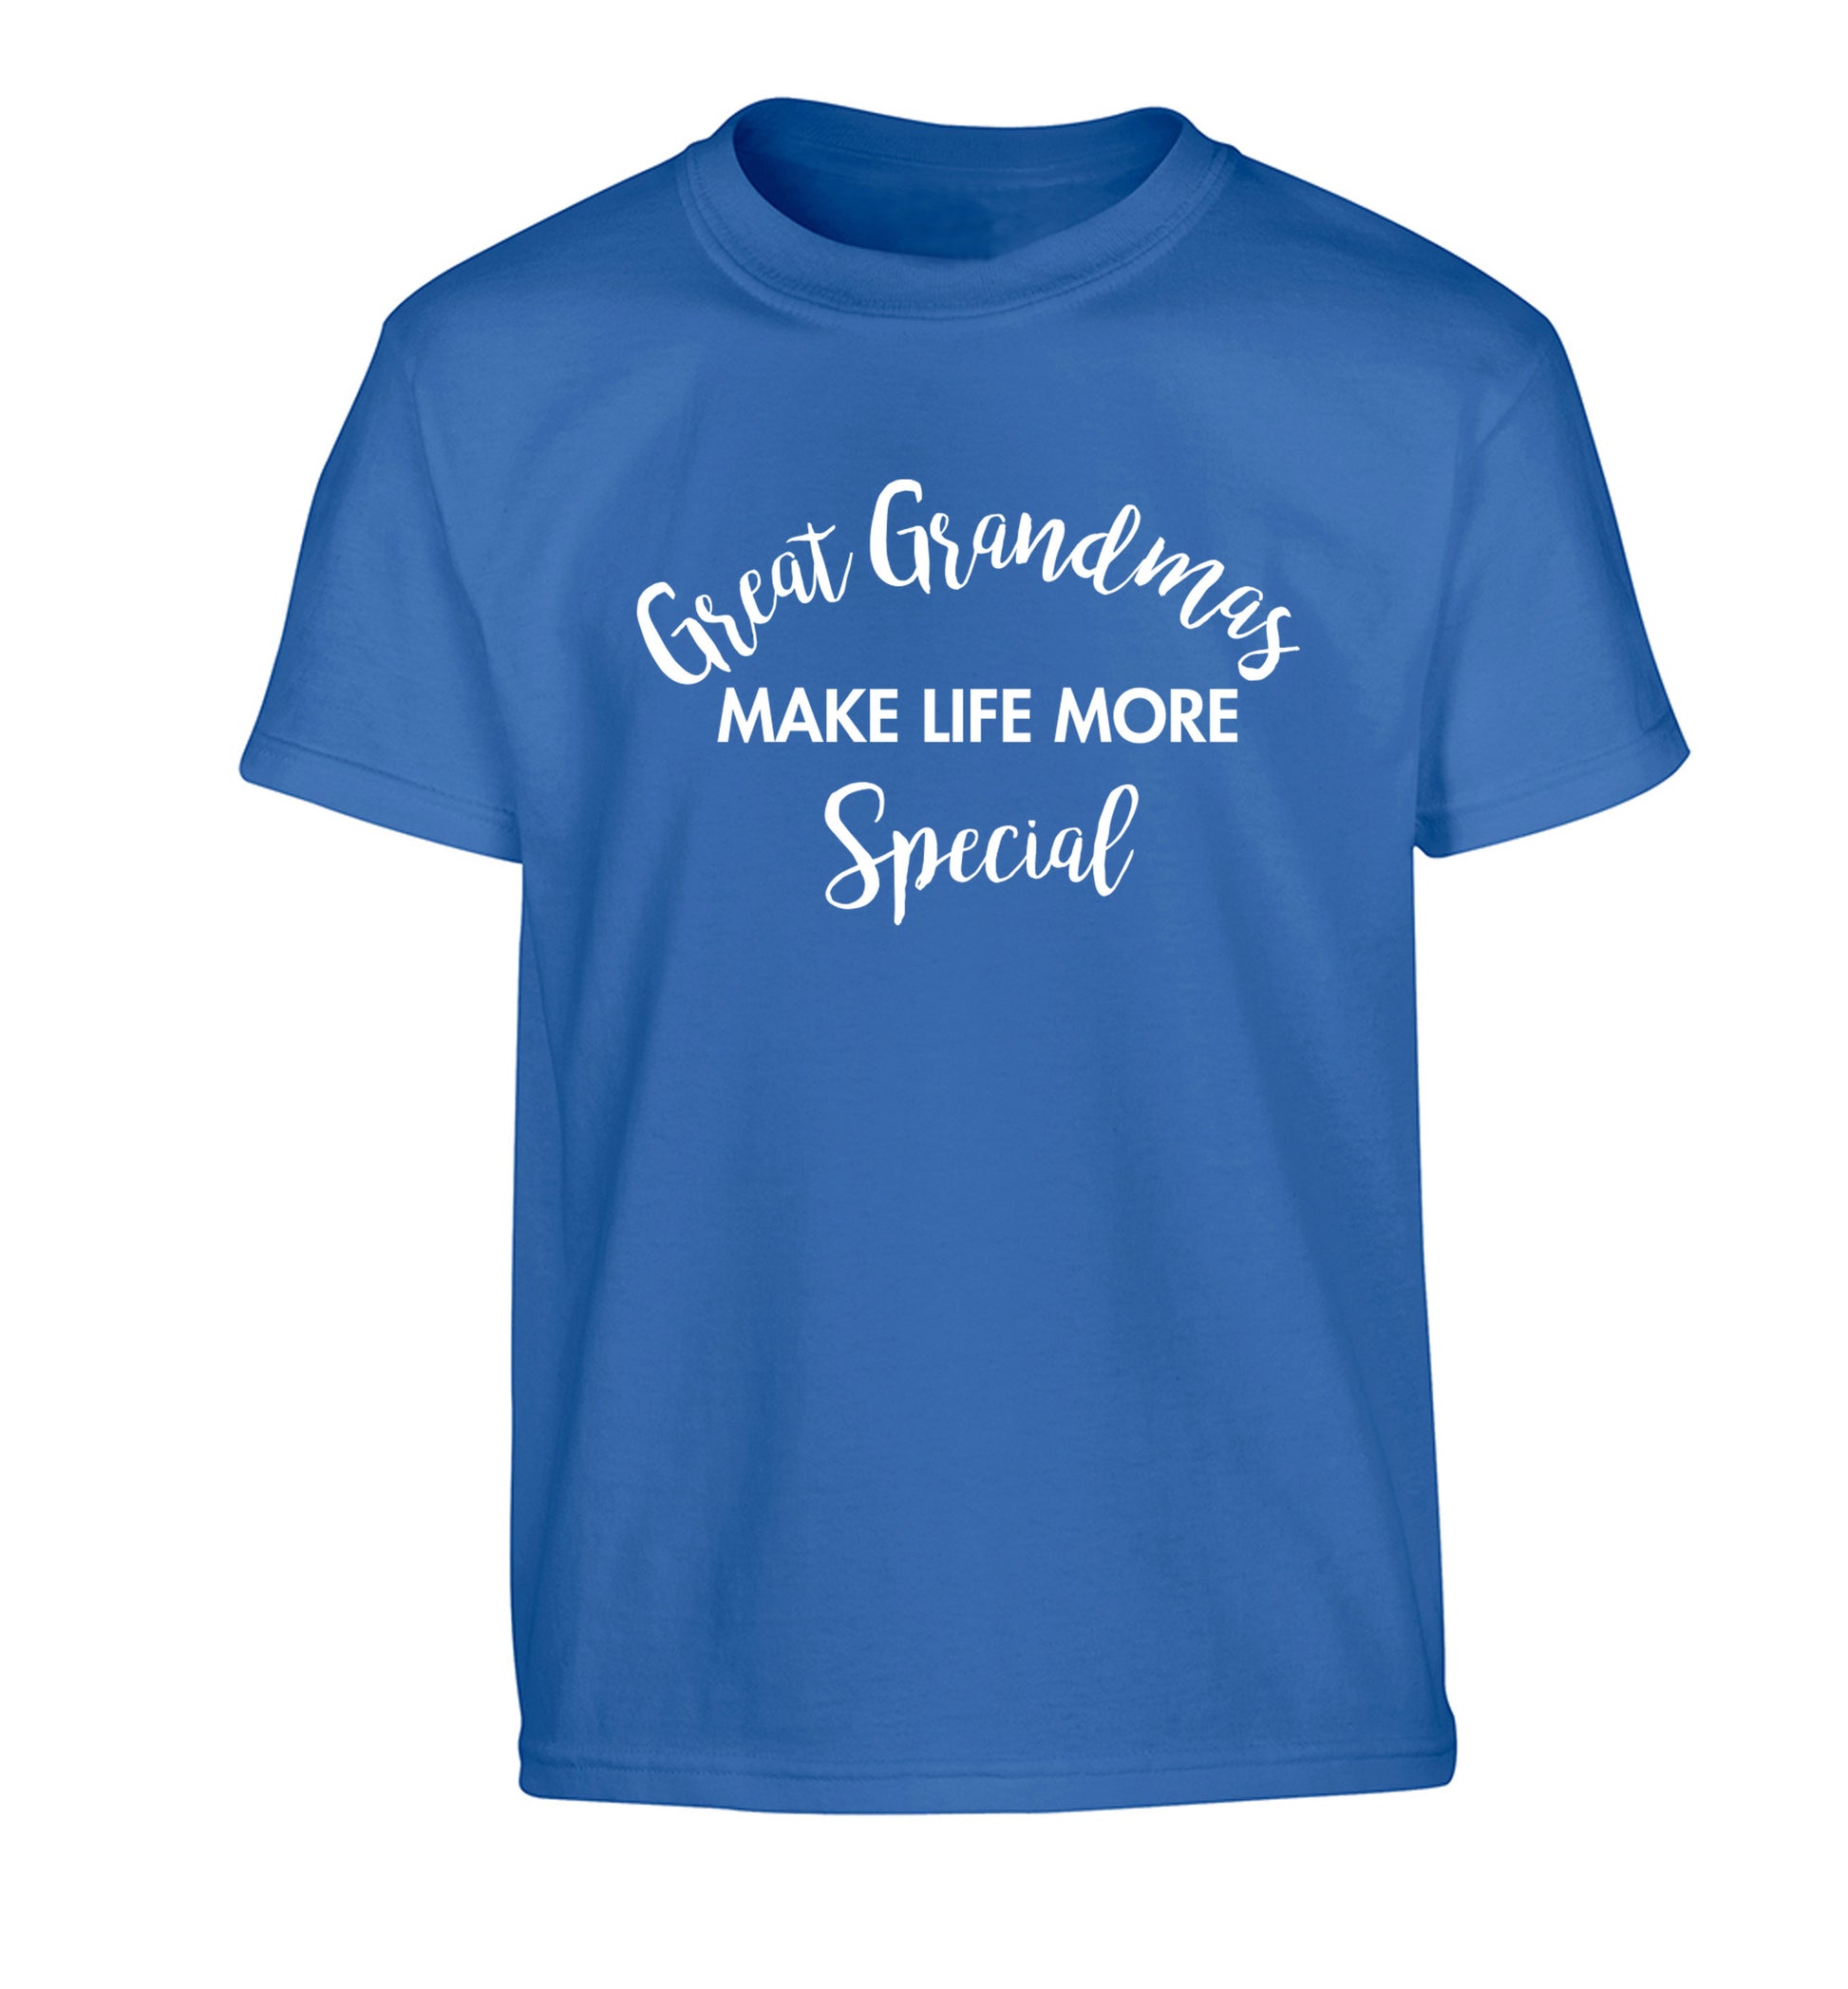 Great Grandmas make life more special Children's blue Tshirt 12-14 Years